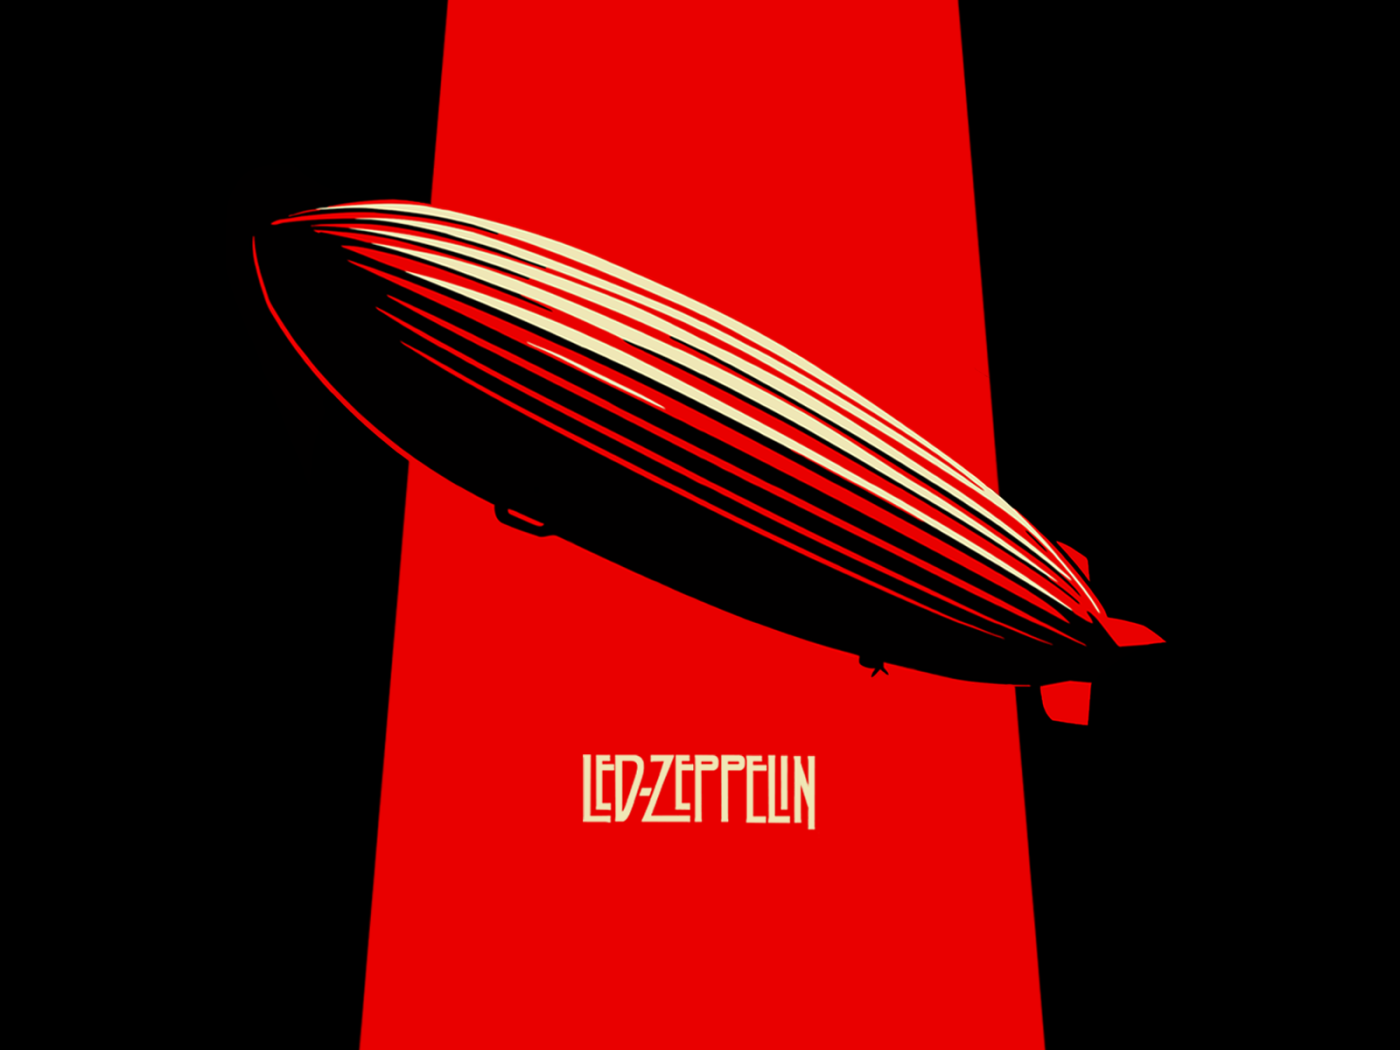 Британская рок-группа Led Zeppelin